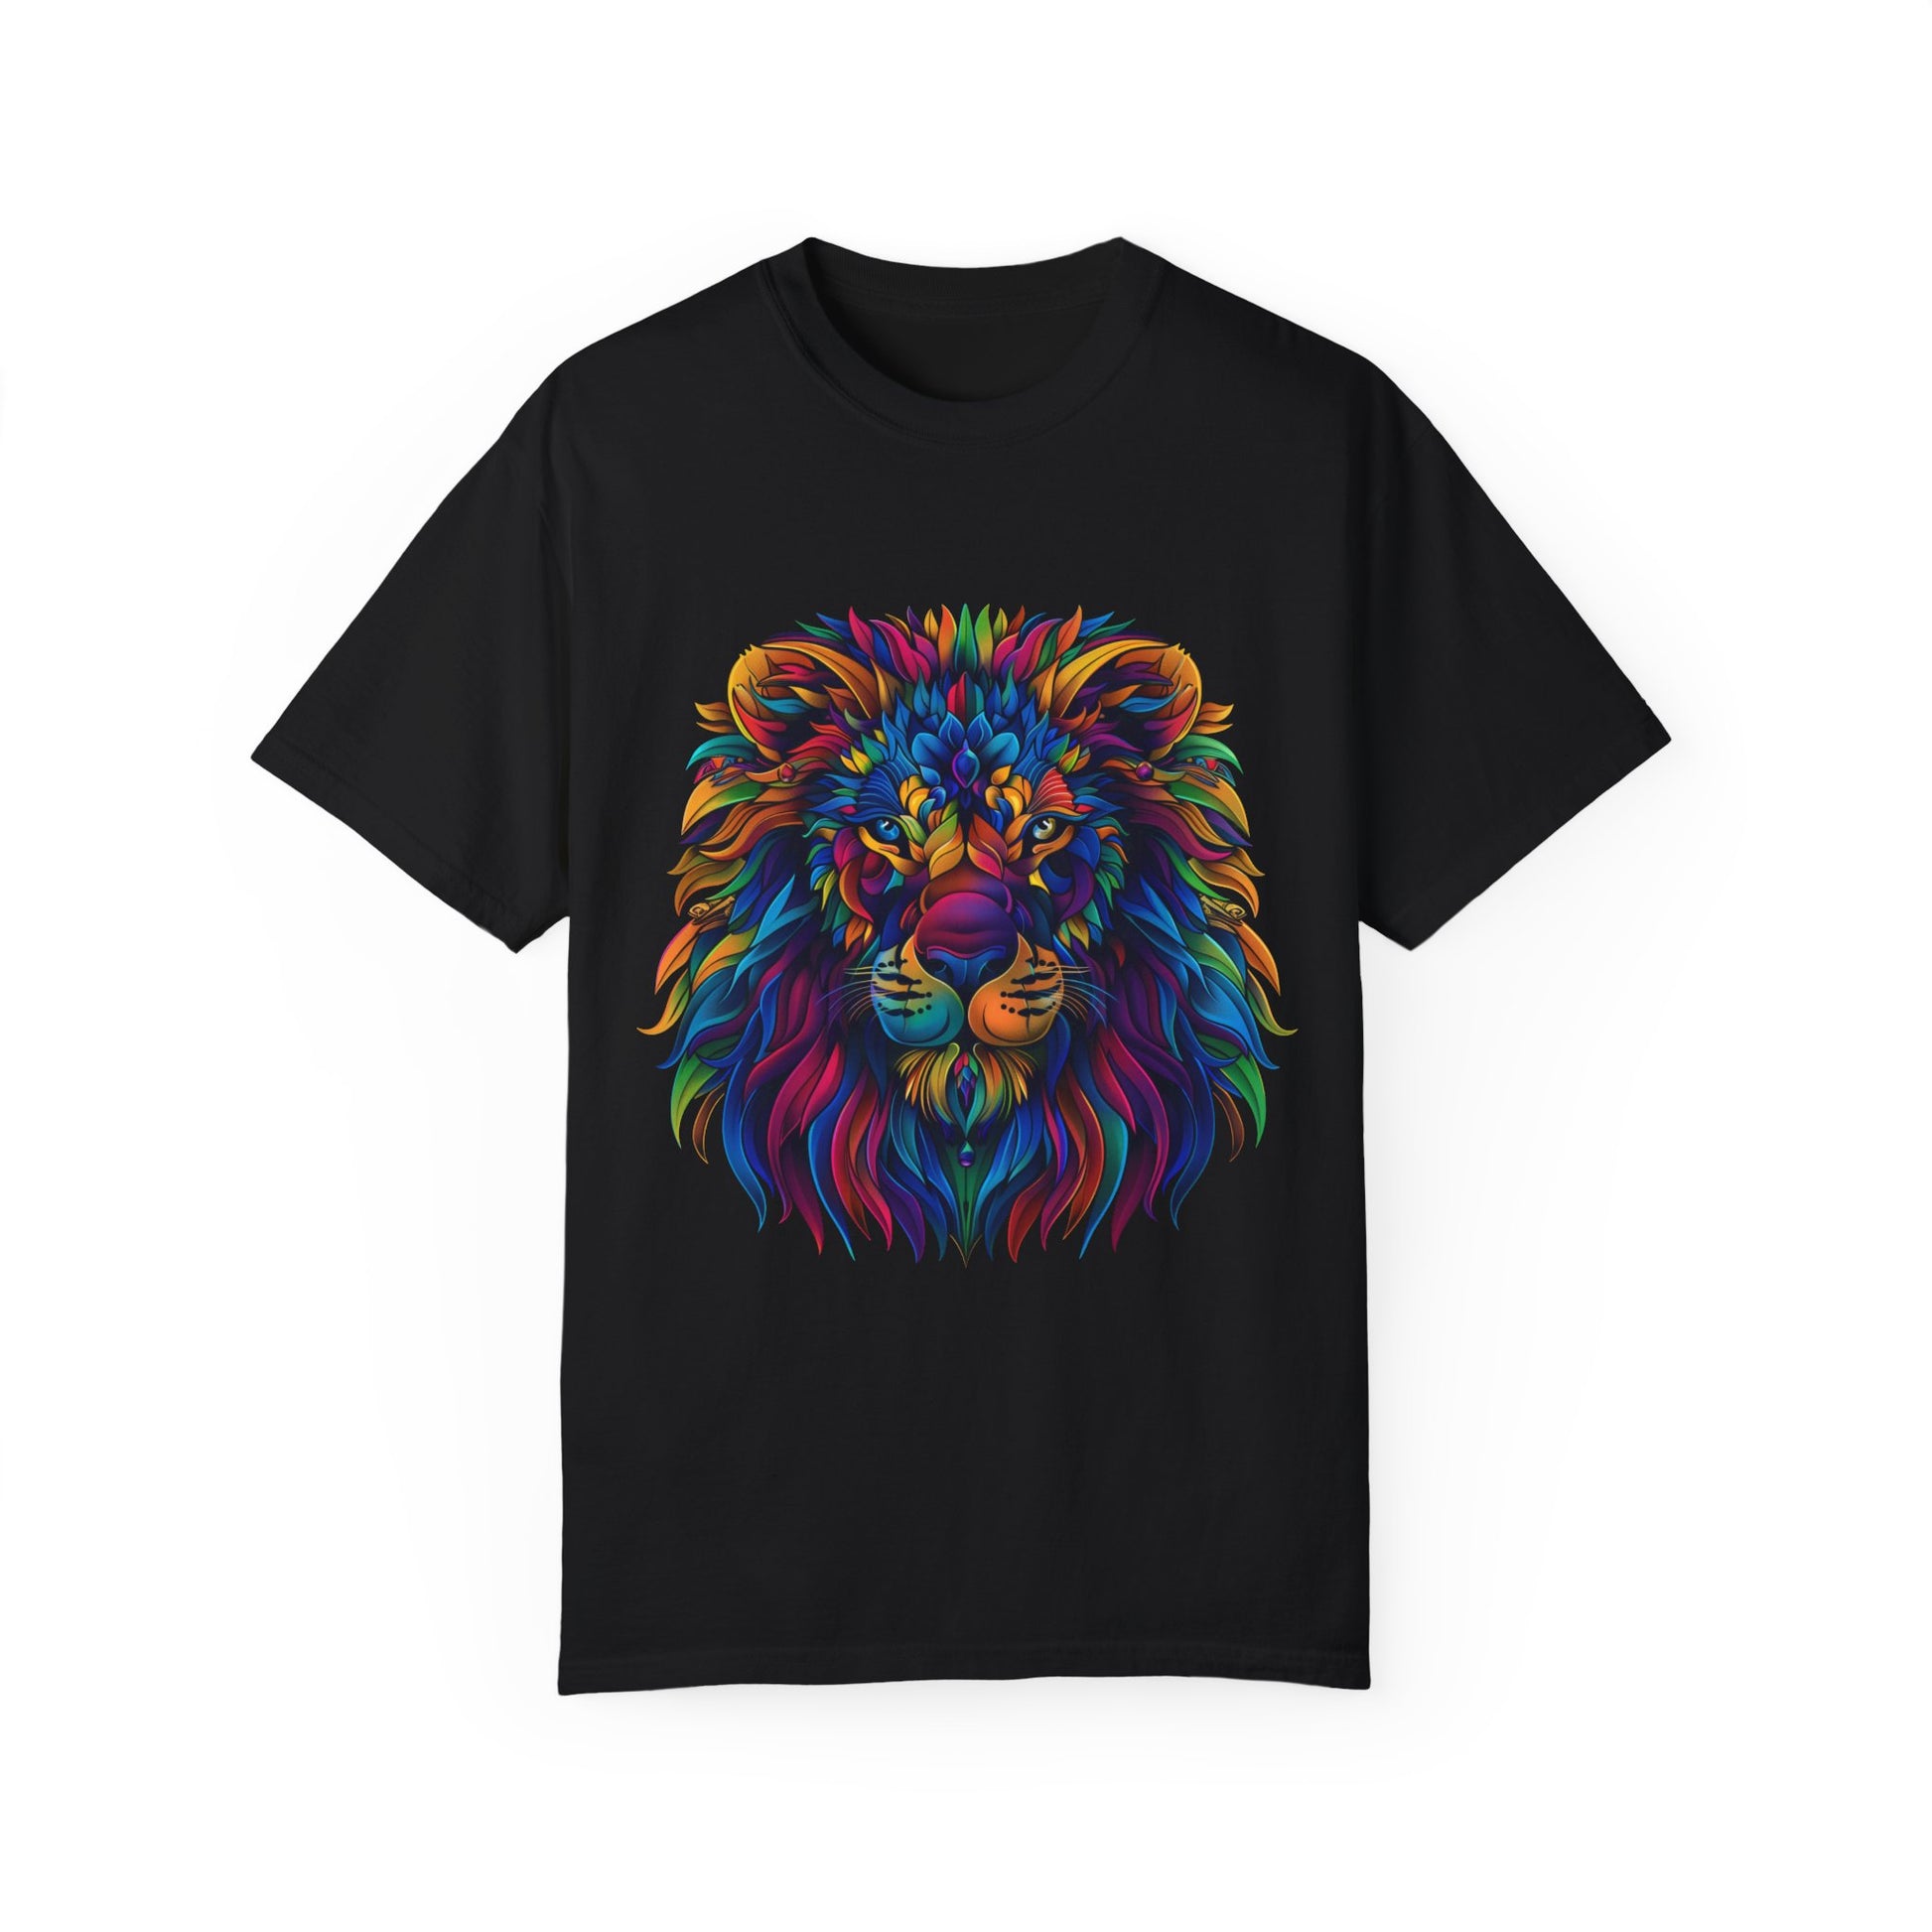 Lion Head Cool Graphic Design Novelty Unisex Garment-dyed T-shirt Cotton Funny Humorous Graphic Soft Premium Unisex Men Women Black T-shirt Birthday Gift-1